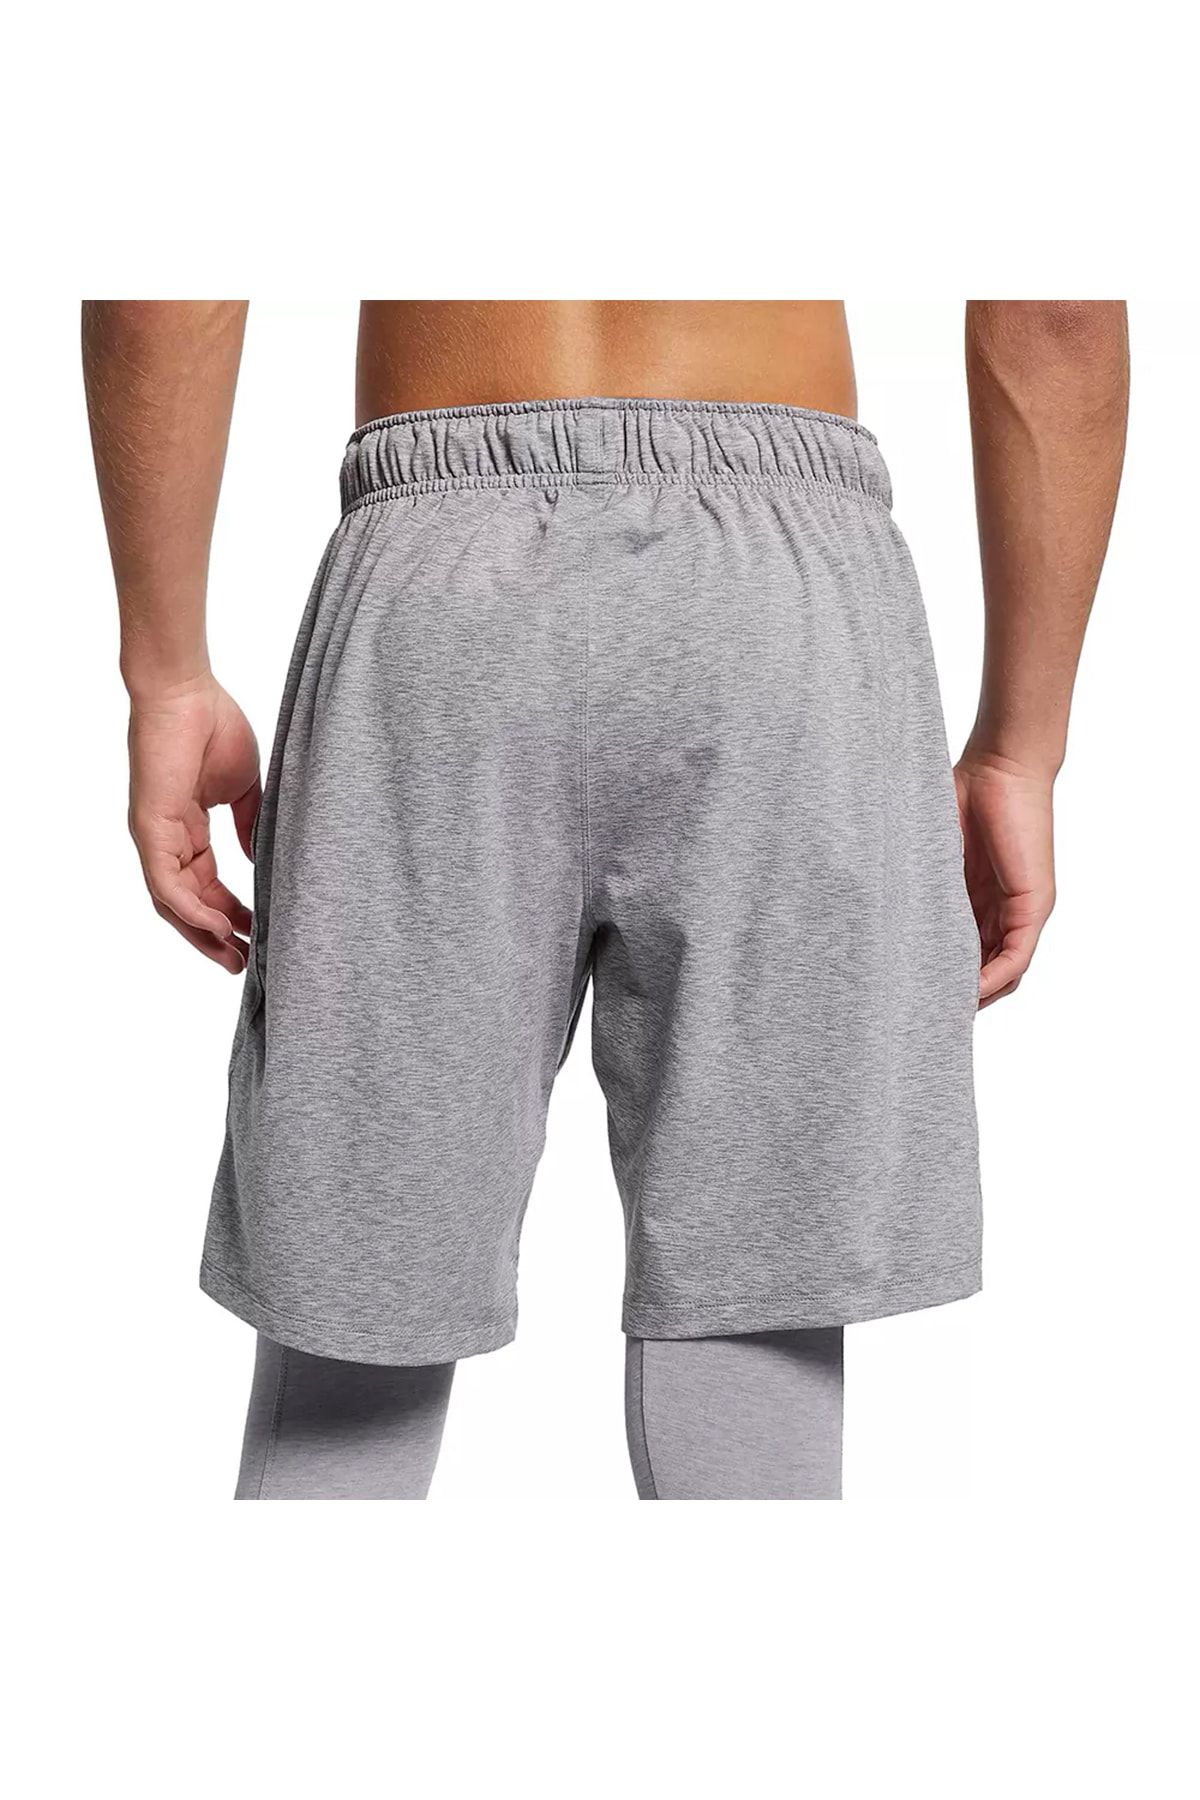 Nike At5693-056 Dri-fit Men's Yoga Shorts - Trendyol